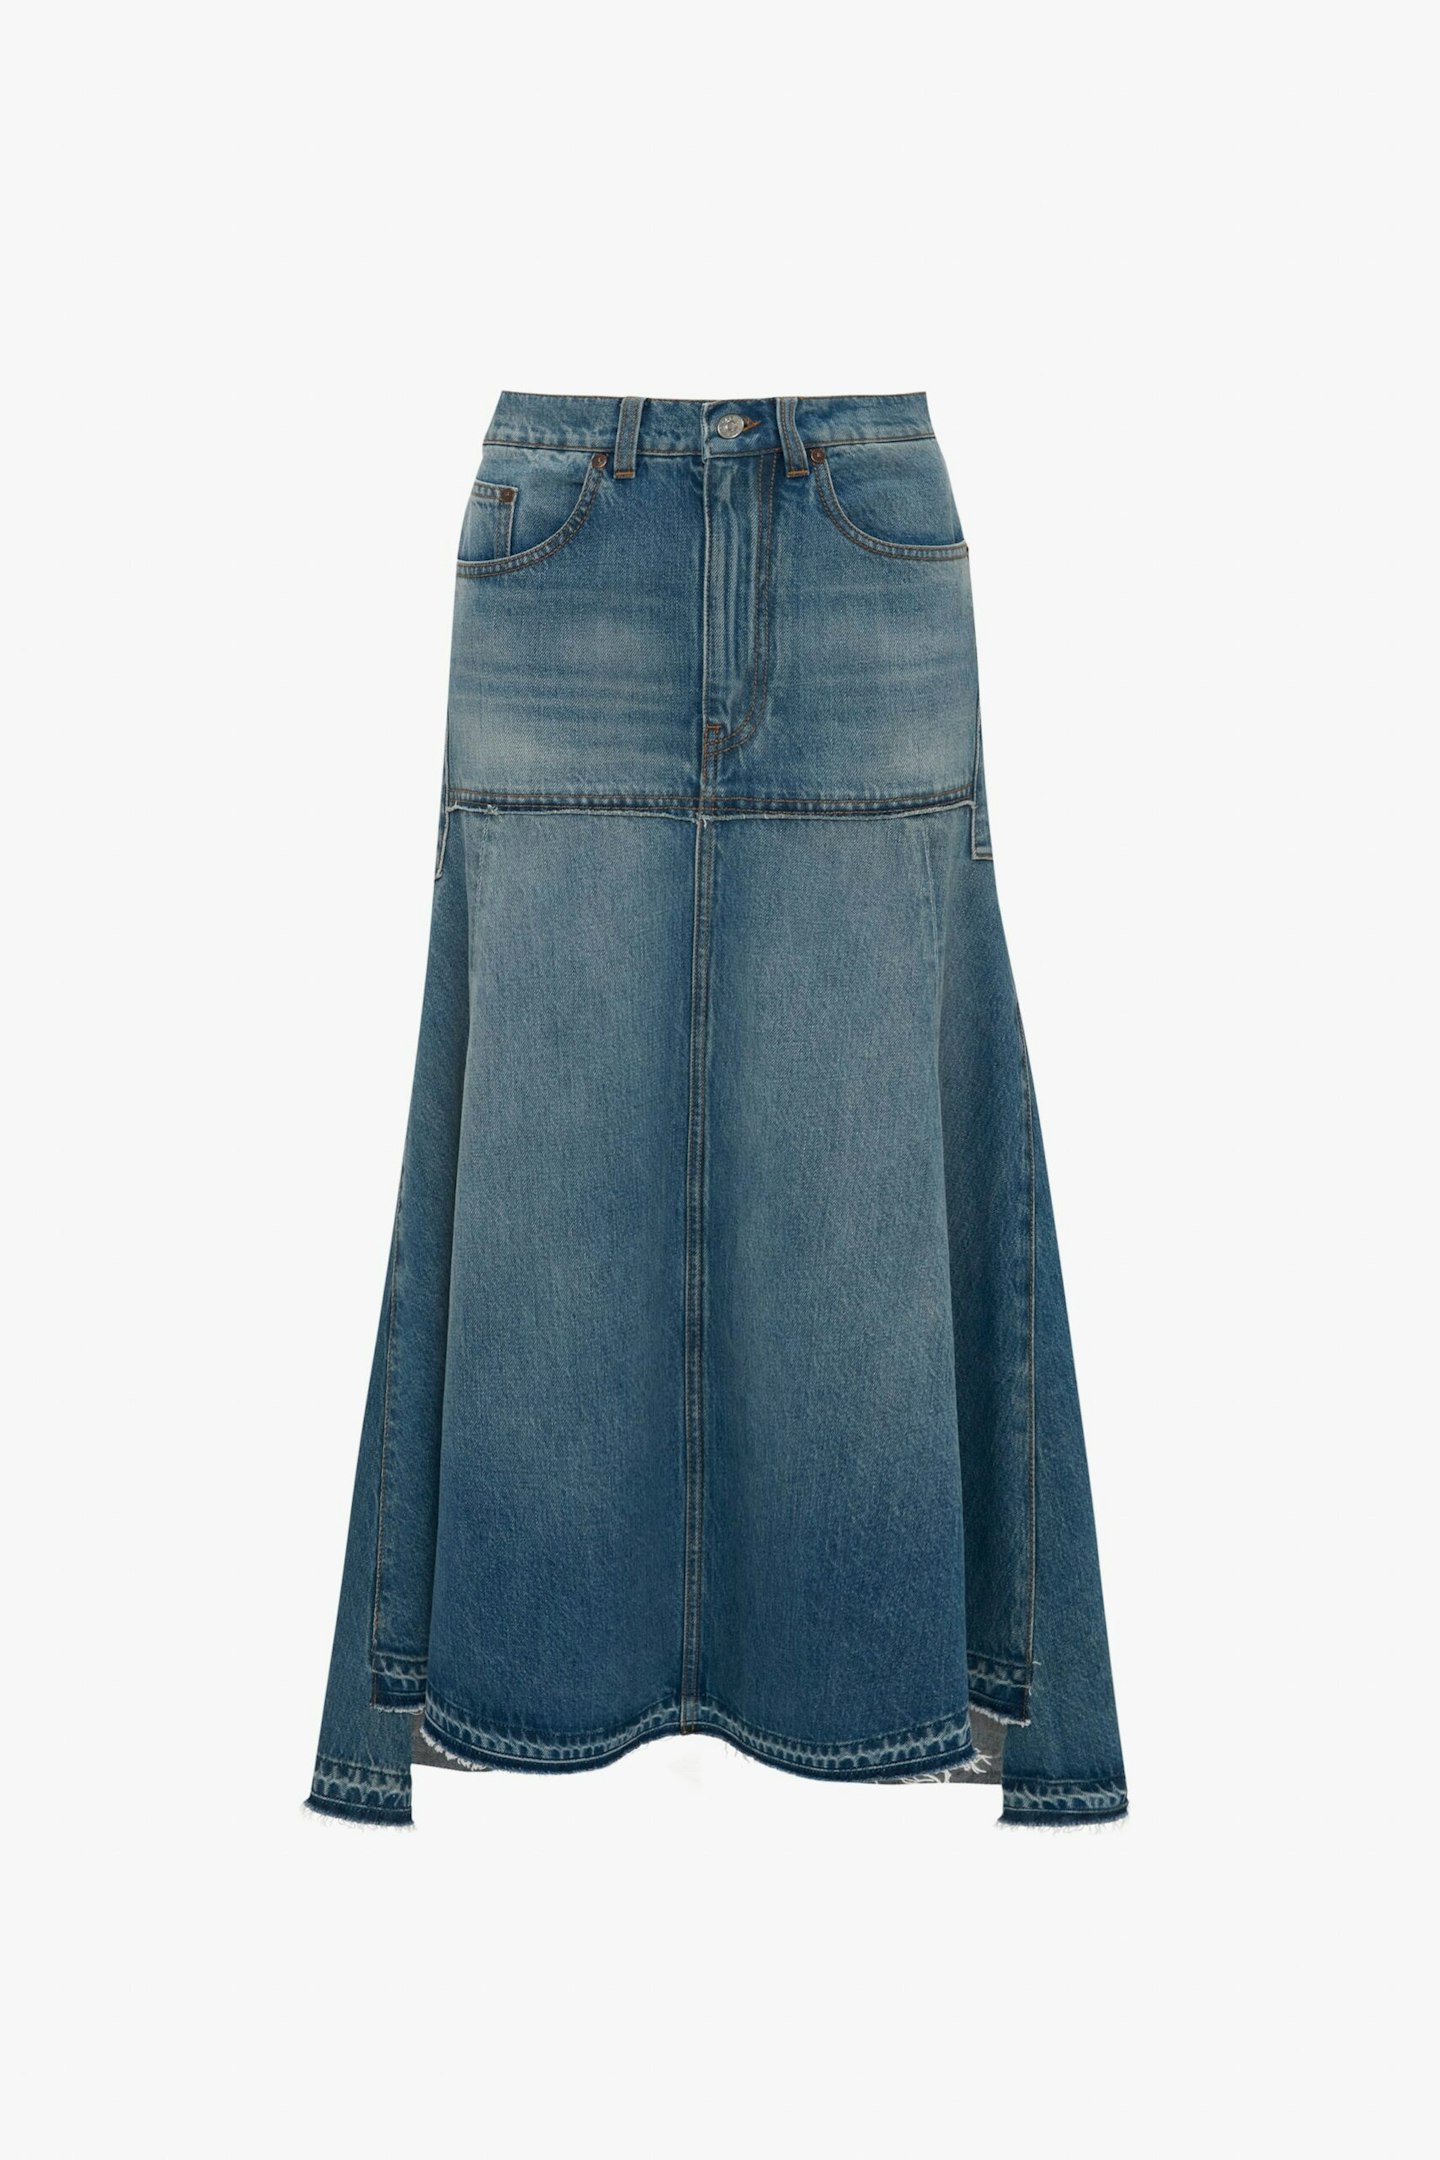 Victoria Beckham, Patched Denim Skirt In Vintage Wash